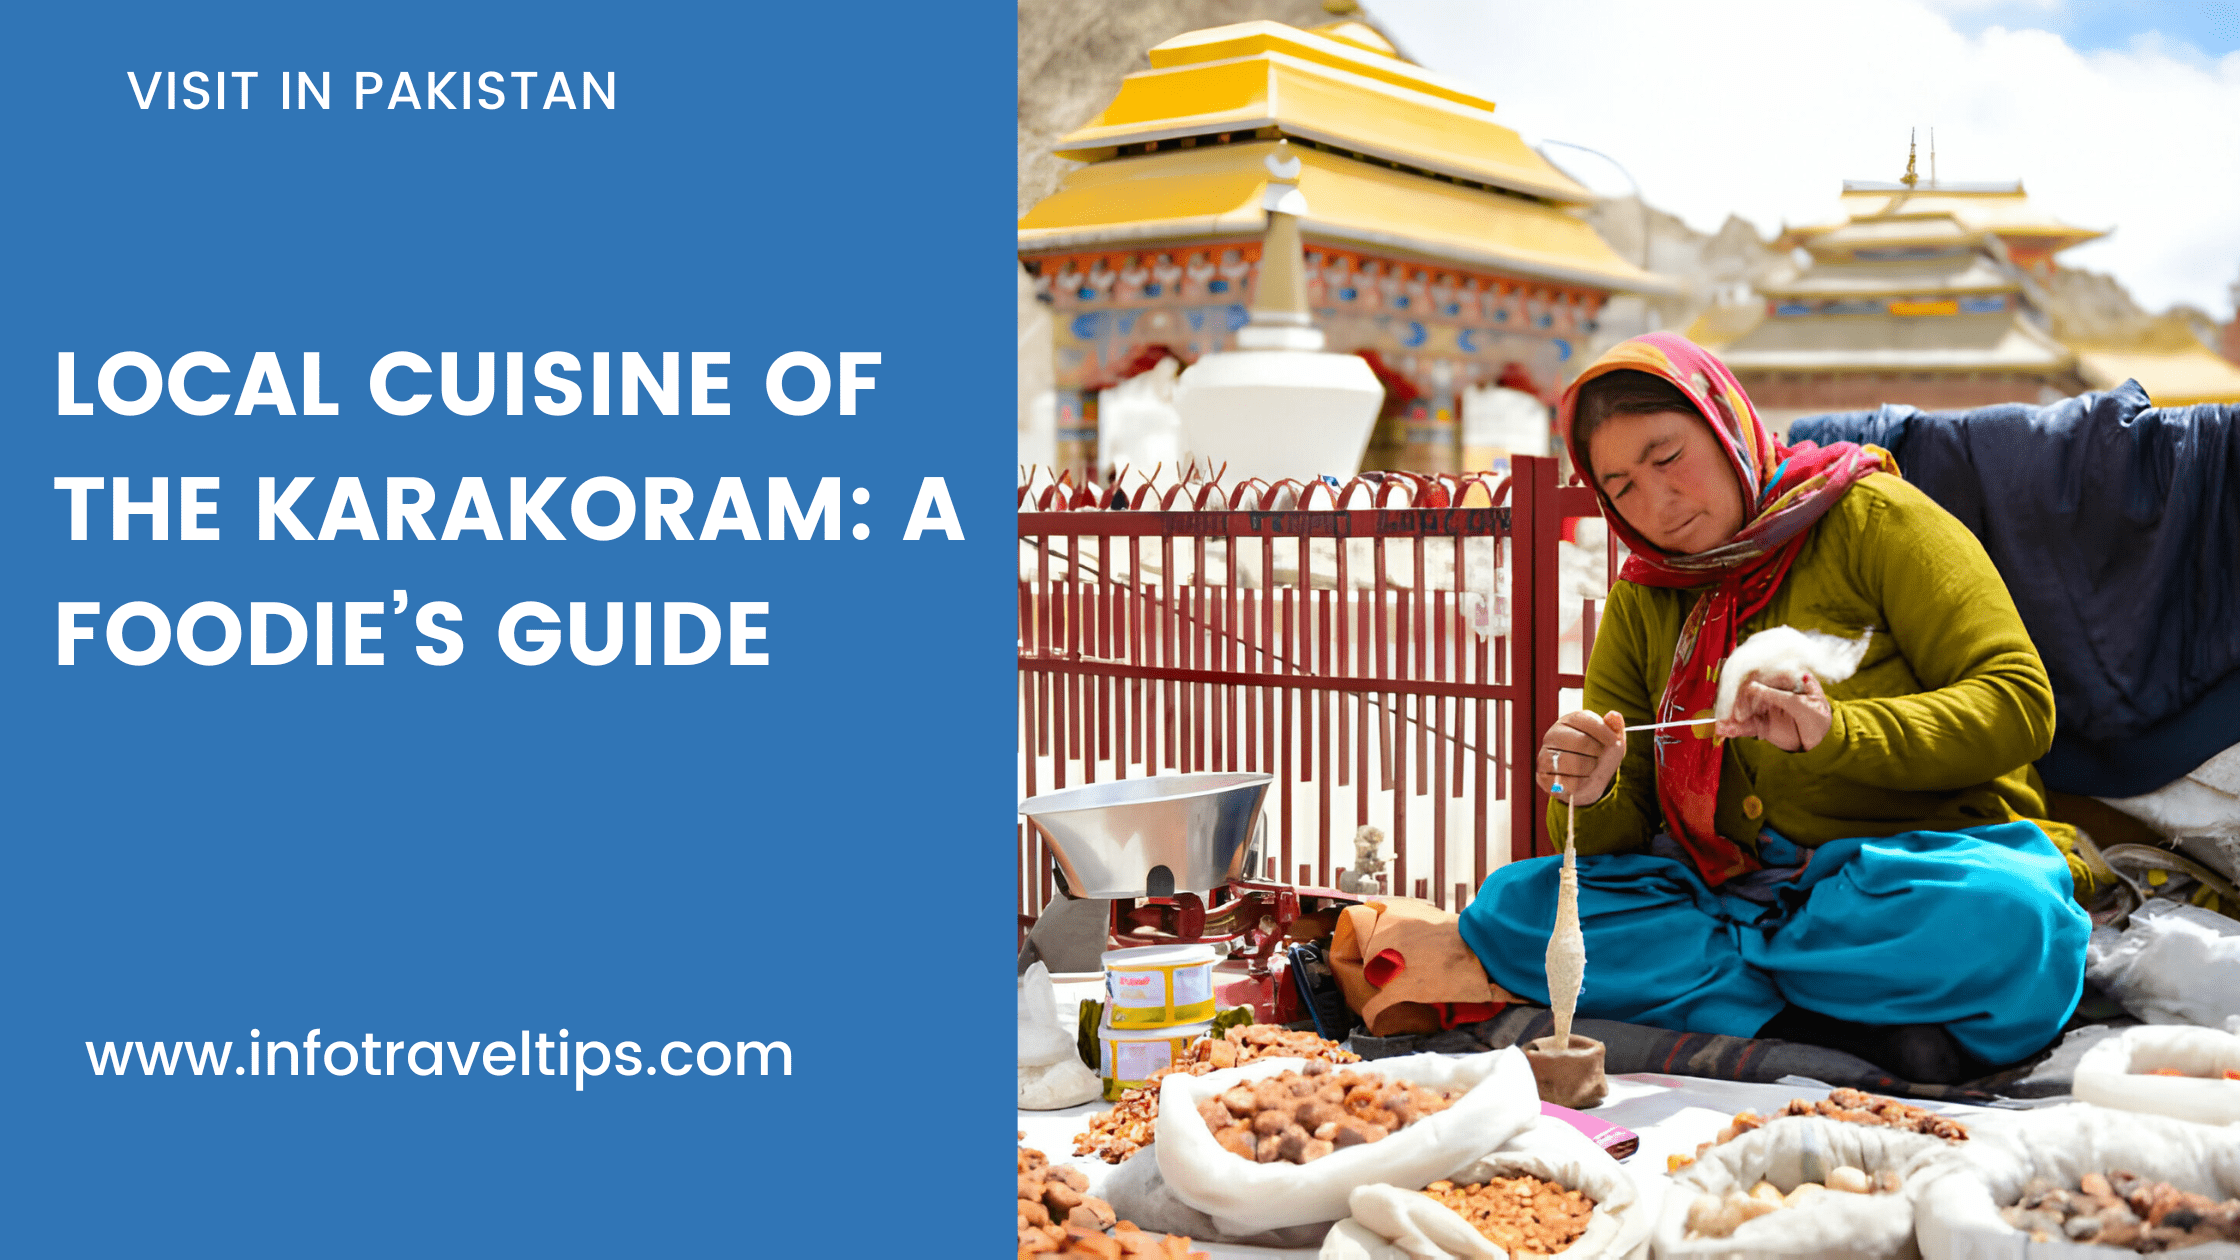 Local Cuisine of the Karakoram: A Foodie’s Guide